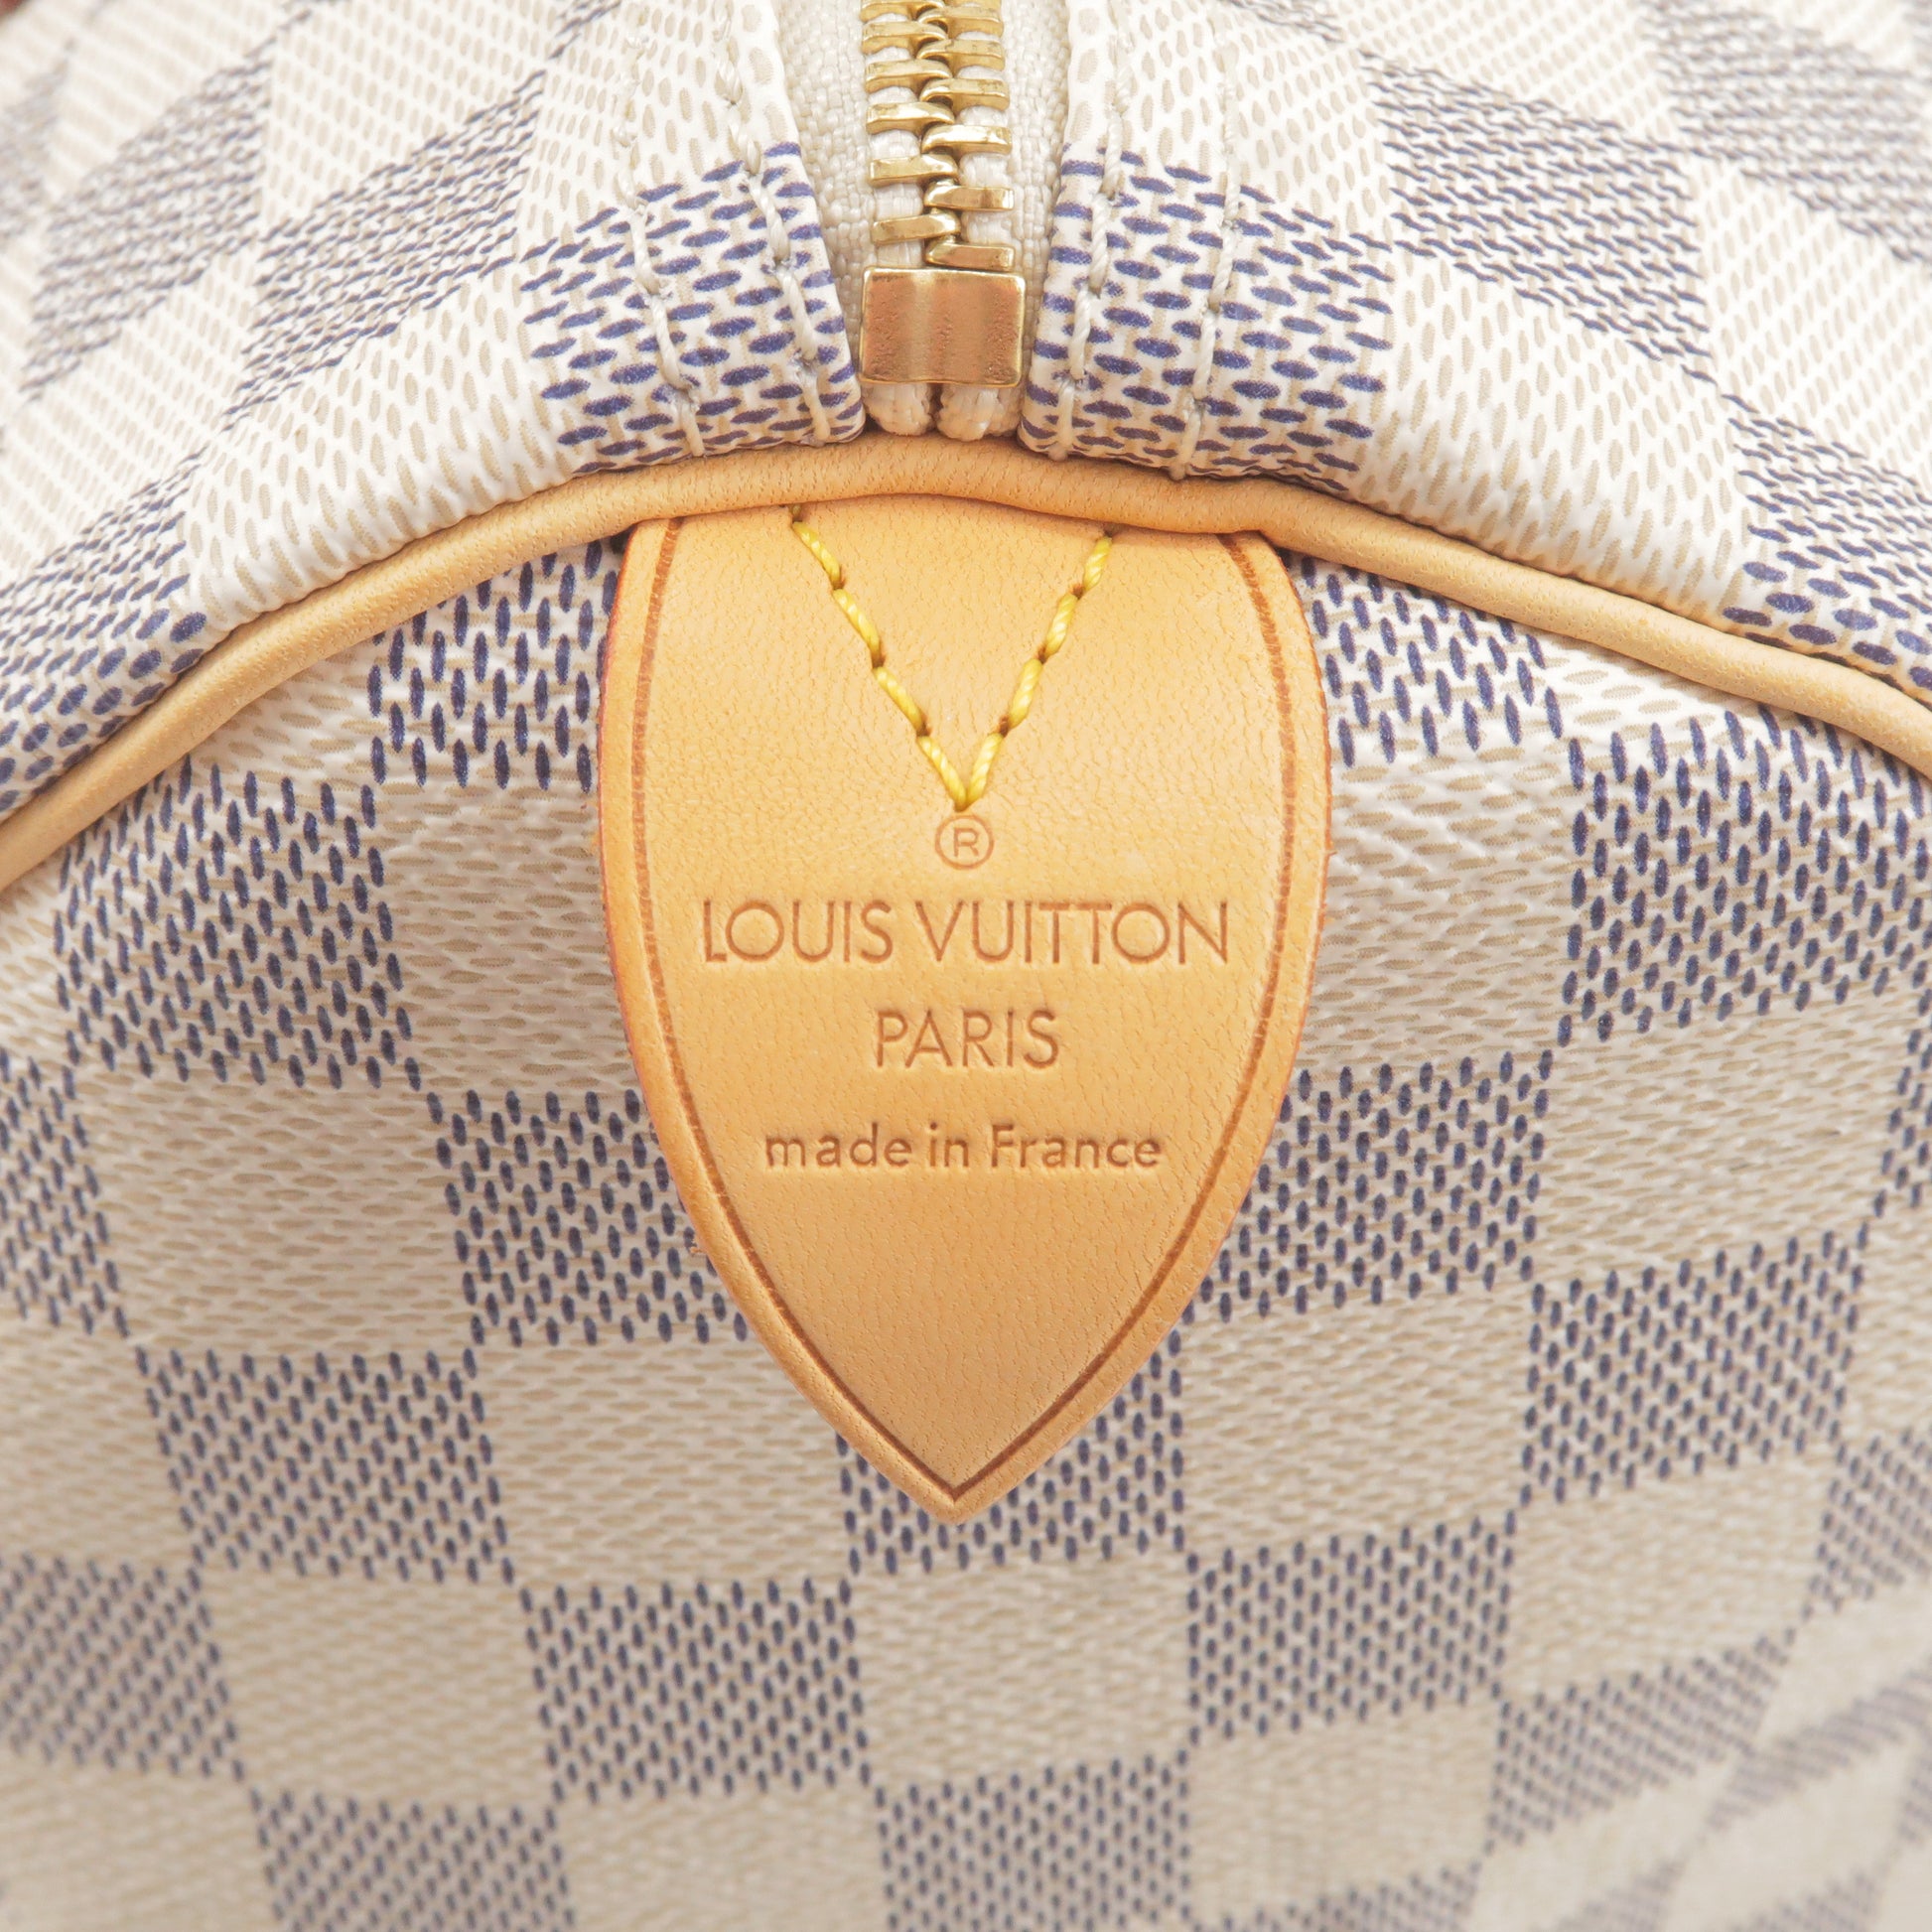 LOUIS VUITTON Damier Azur Canvas Speedy 30 Bag - The Luxury Pop